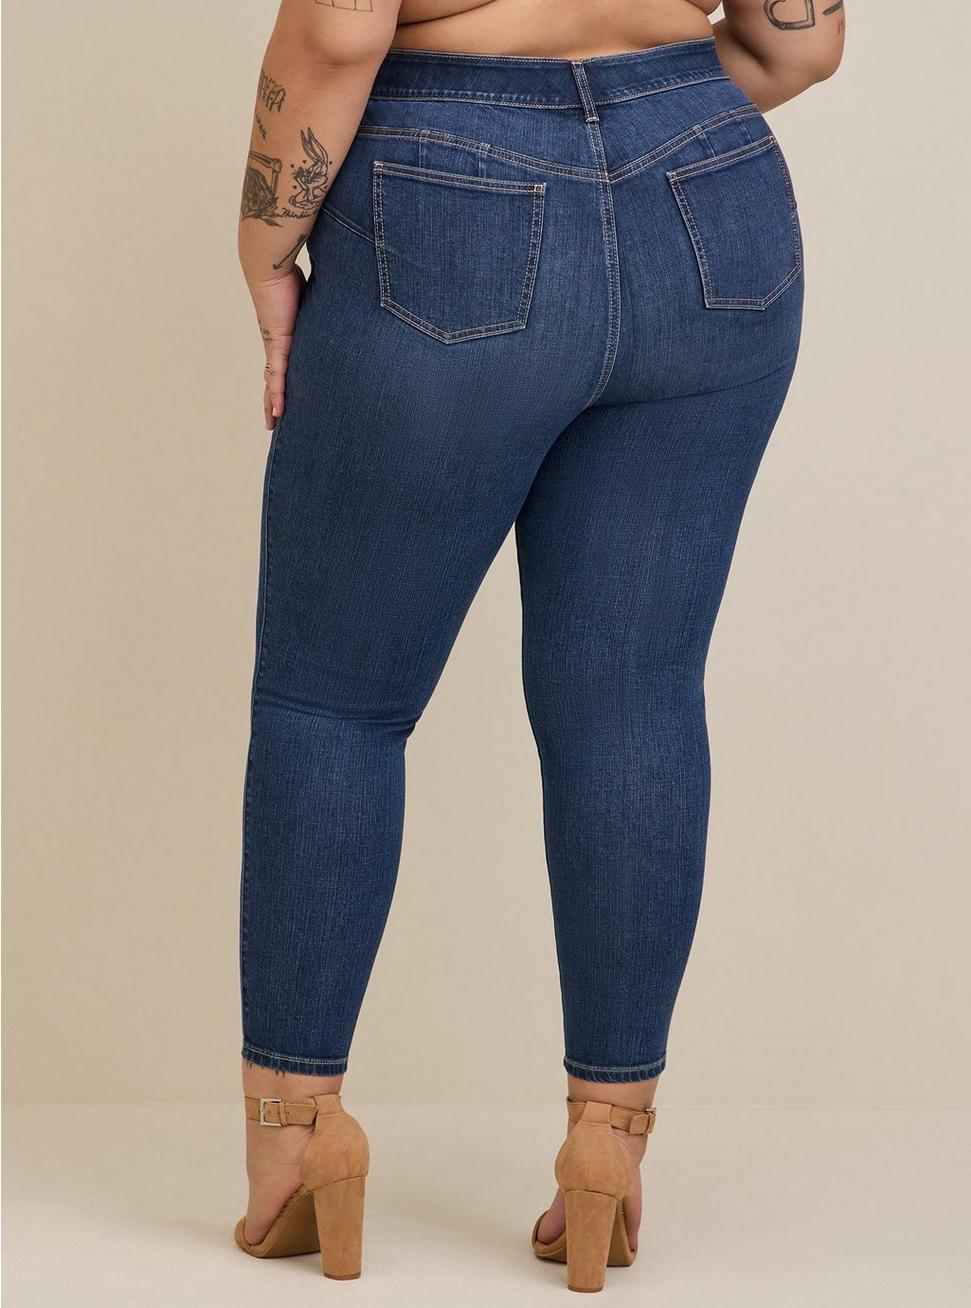 Bombshell Skinny Vintage Stretch High-Rise Jean (Regular), BACK COUNTRY, alternate